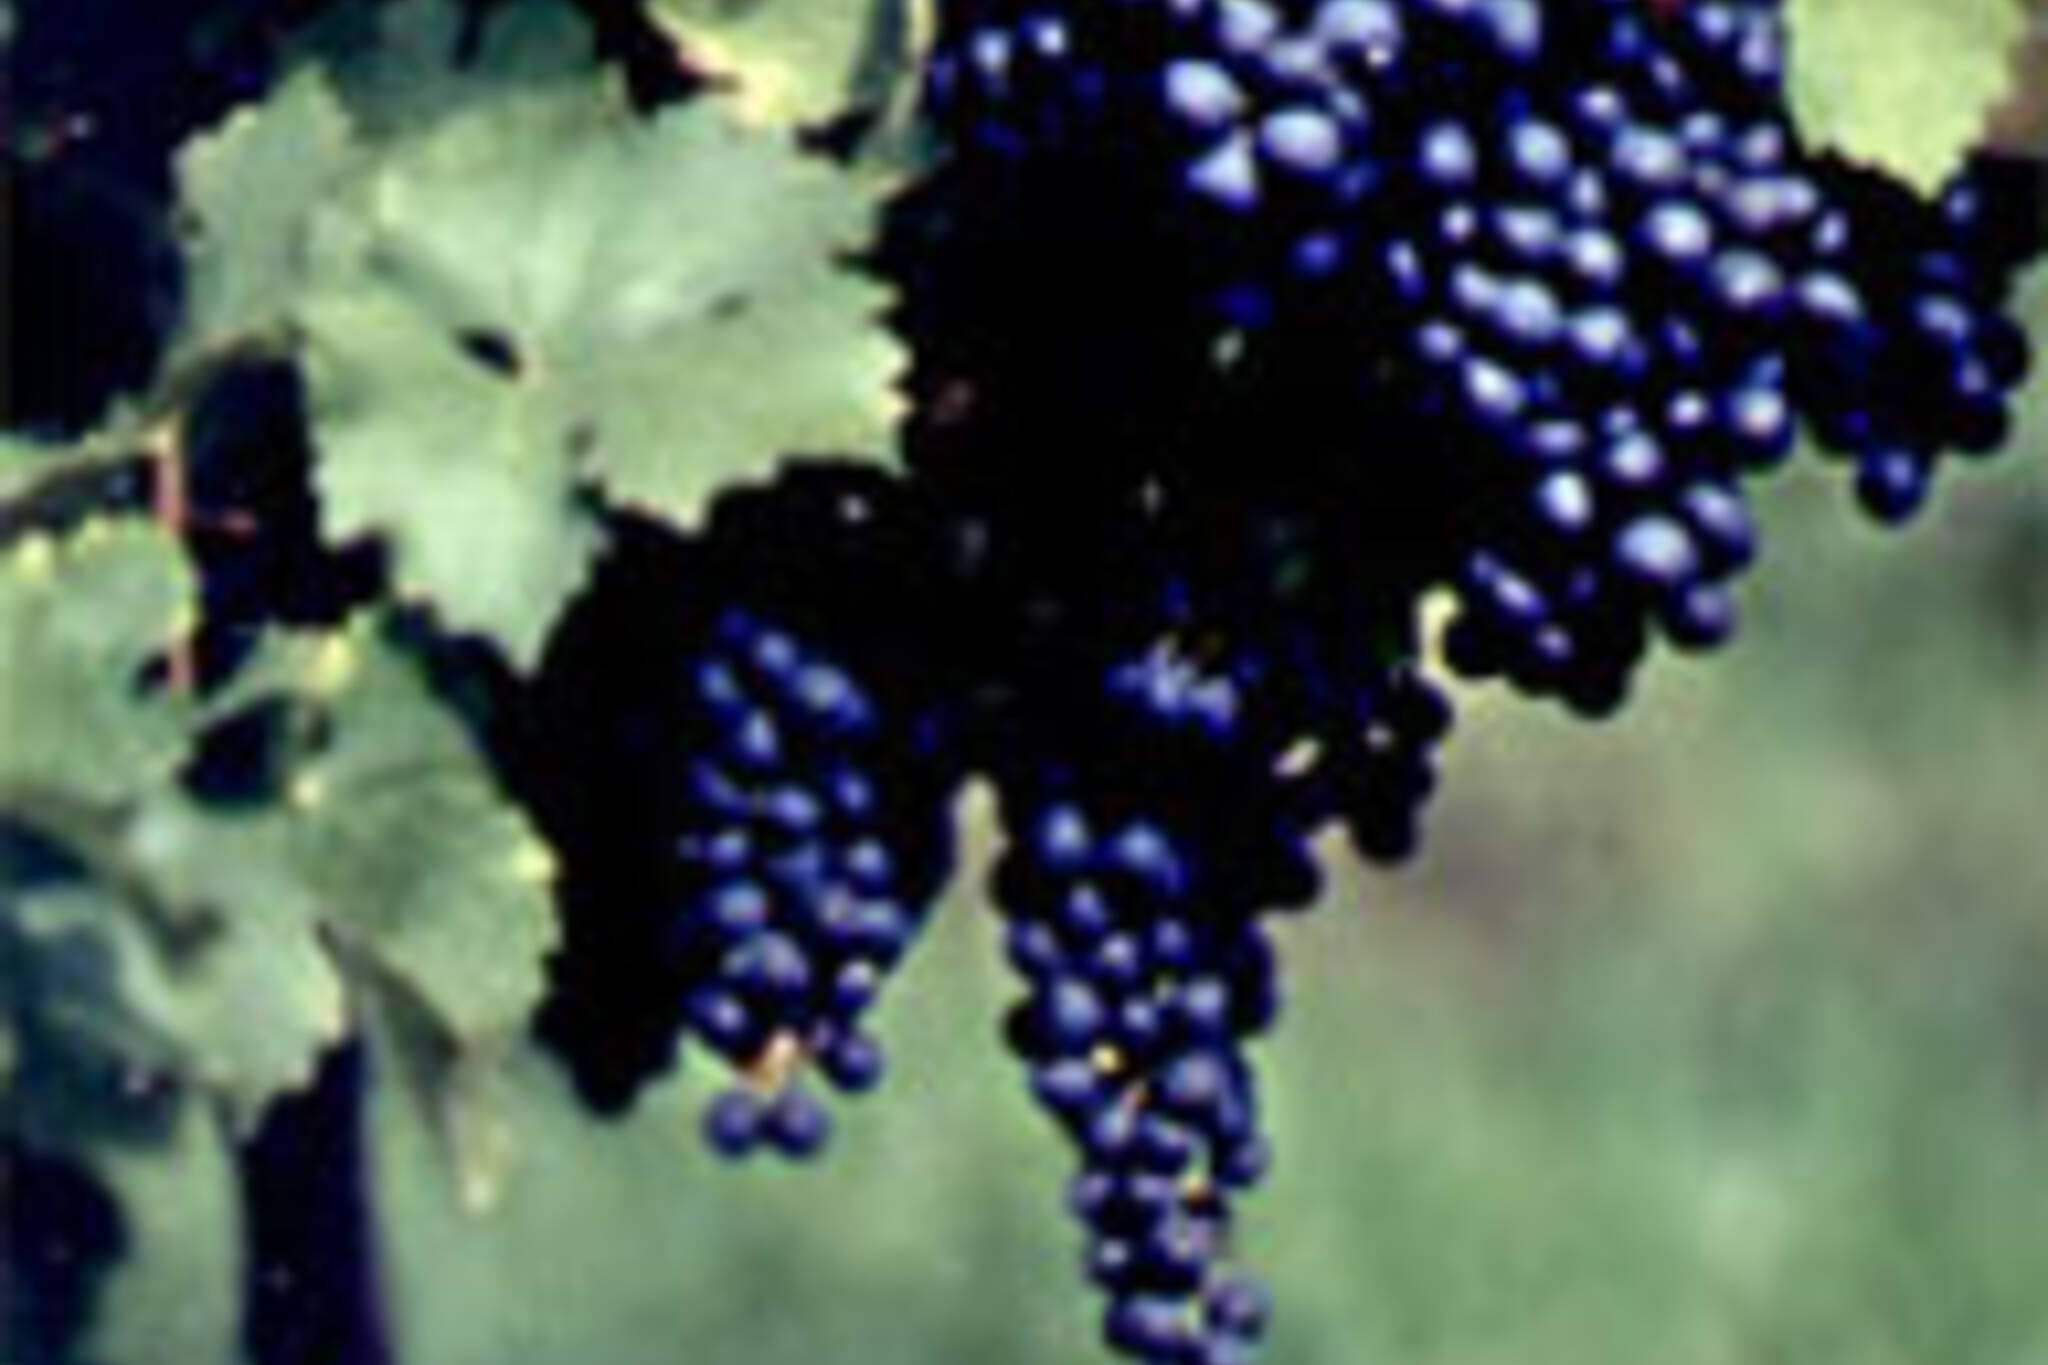 Cabernet Franc Grapes at the Henry of Pelham vineyard (from www.henryofpelham.com)